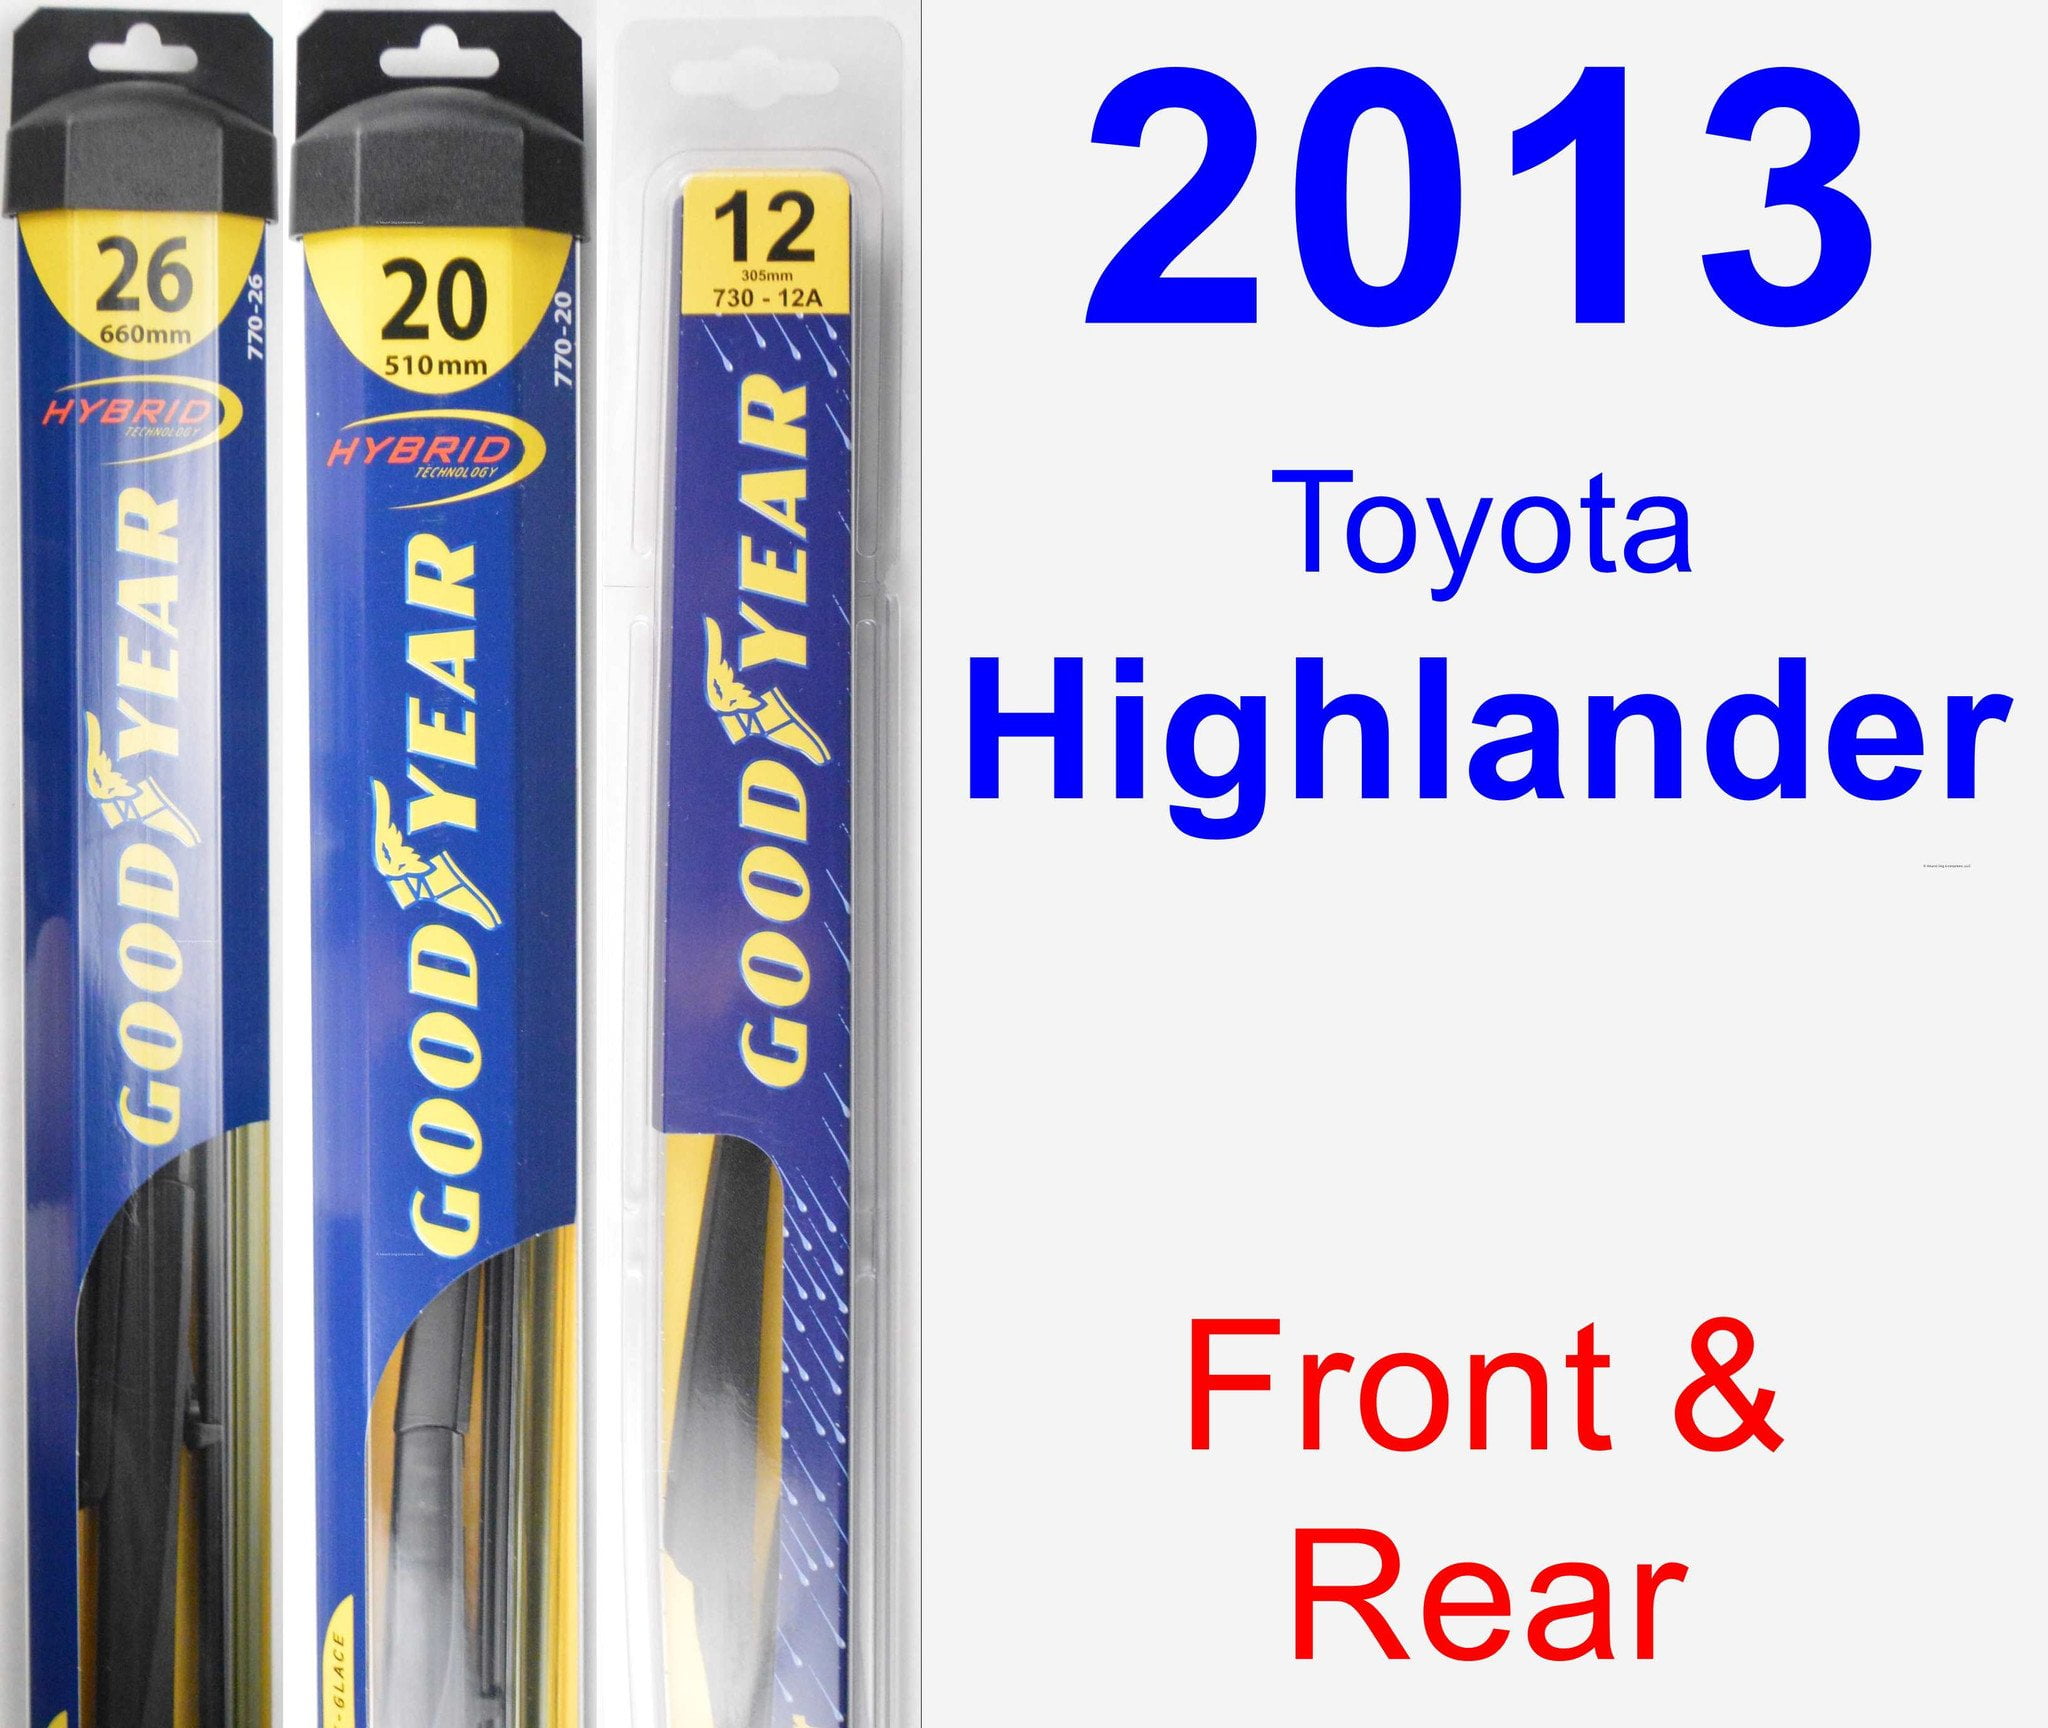 2013 Toyota Highlander Wiper Blade Set/Kit (Front & Rear) (3 Blades) - Rear - Walmart.com What Size Wiper Blades For 2013 Toyota Highlander